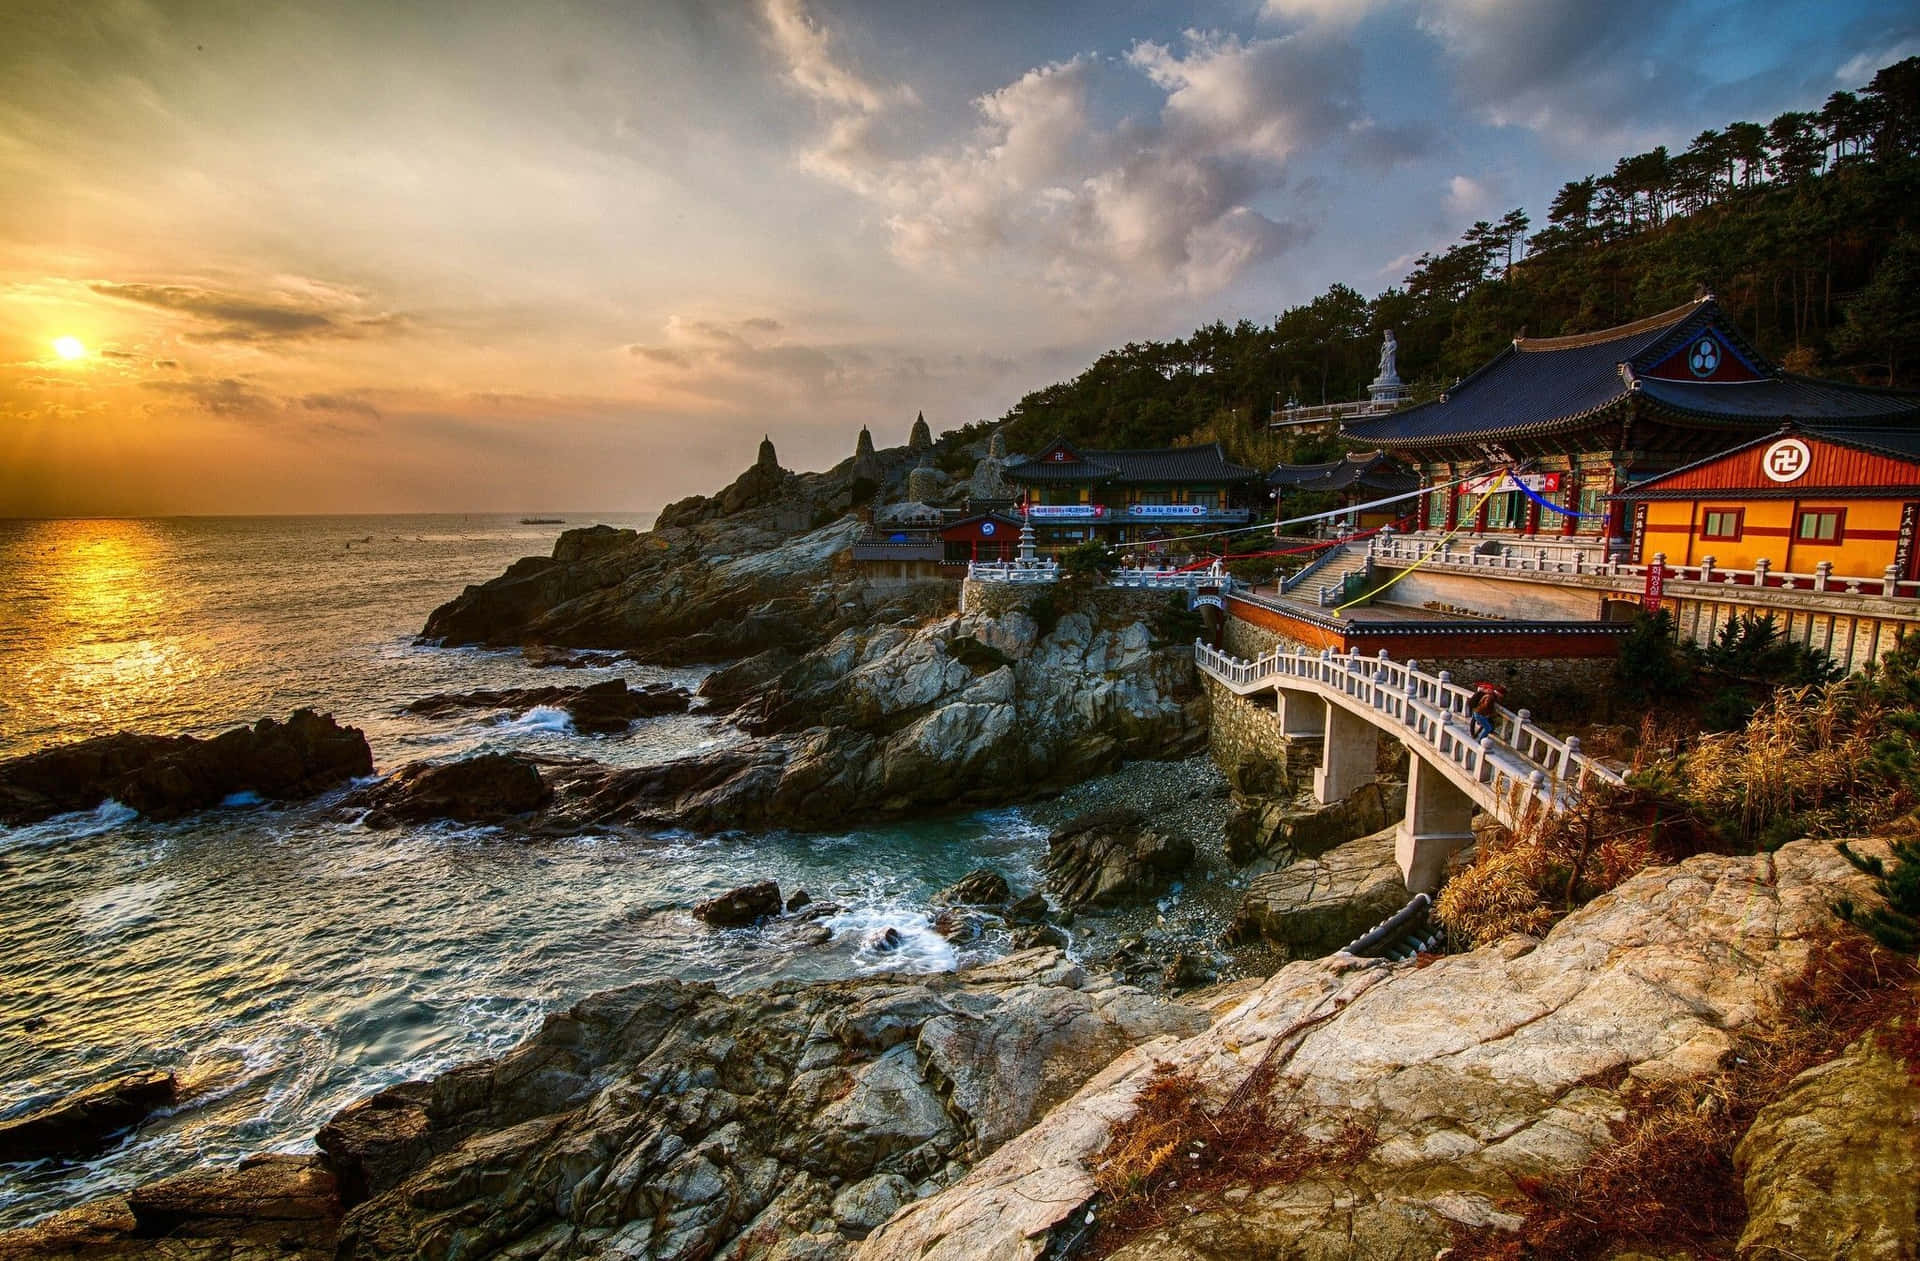 “A Beautiful Beachscape in South Korea”